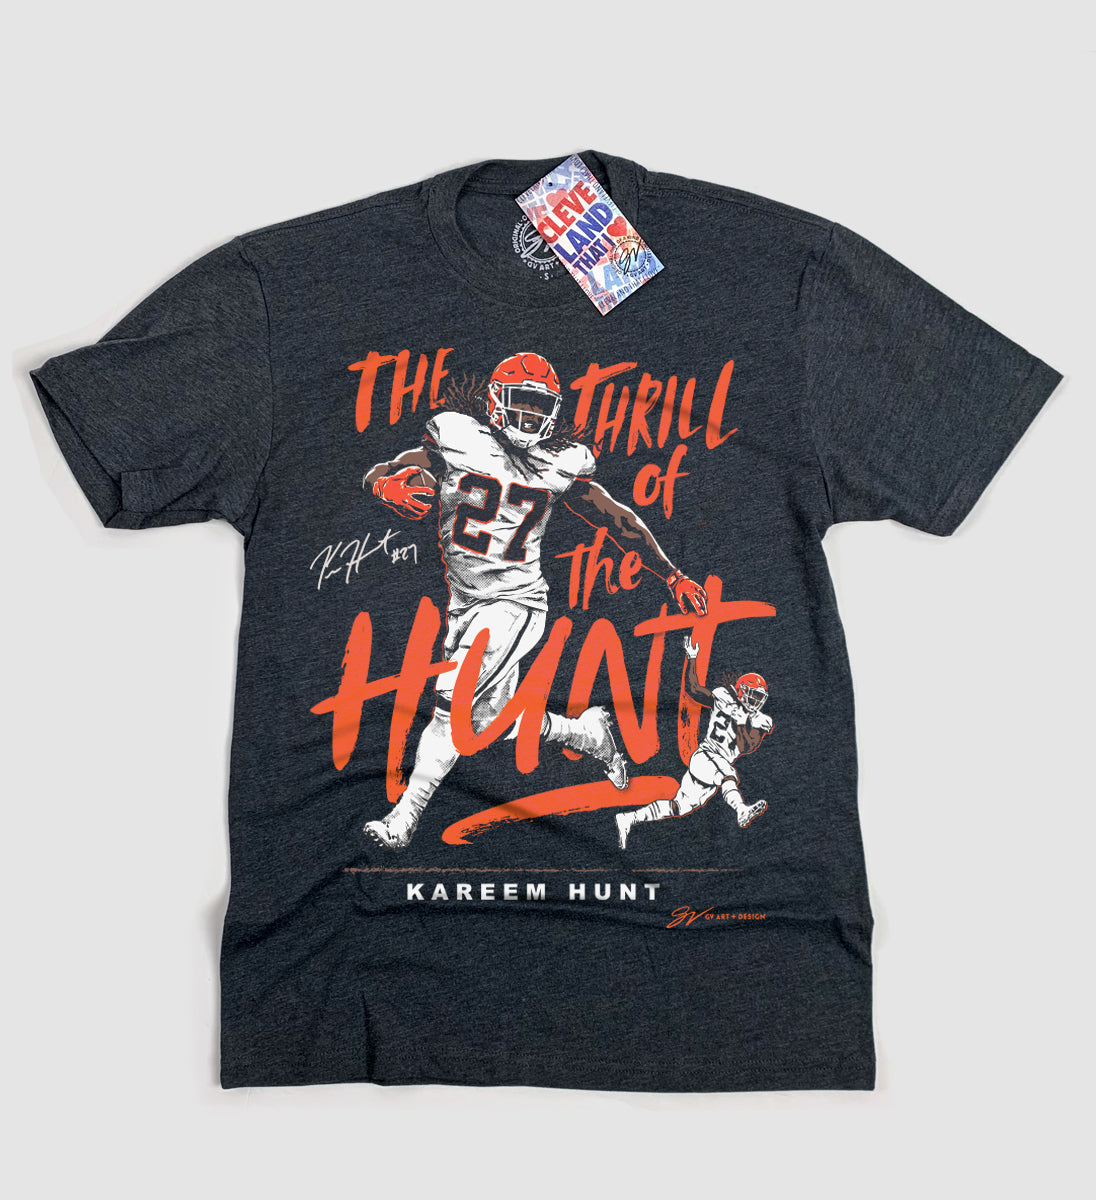 Kareem Hunt "The Thrill Of The Hunt" T shirt